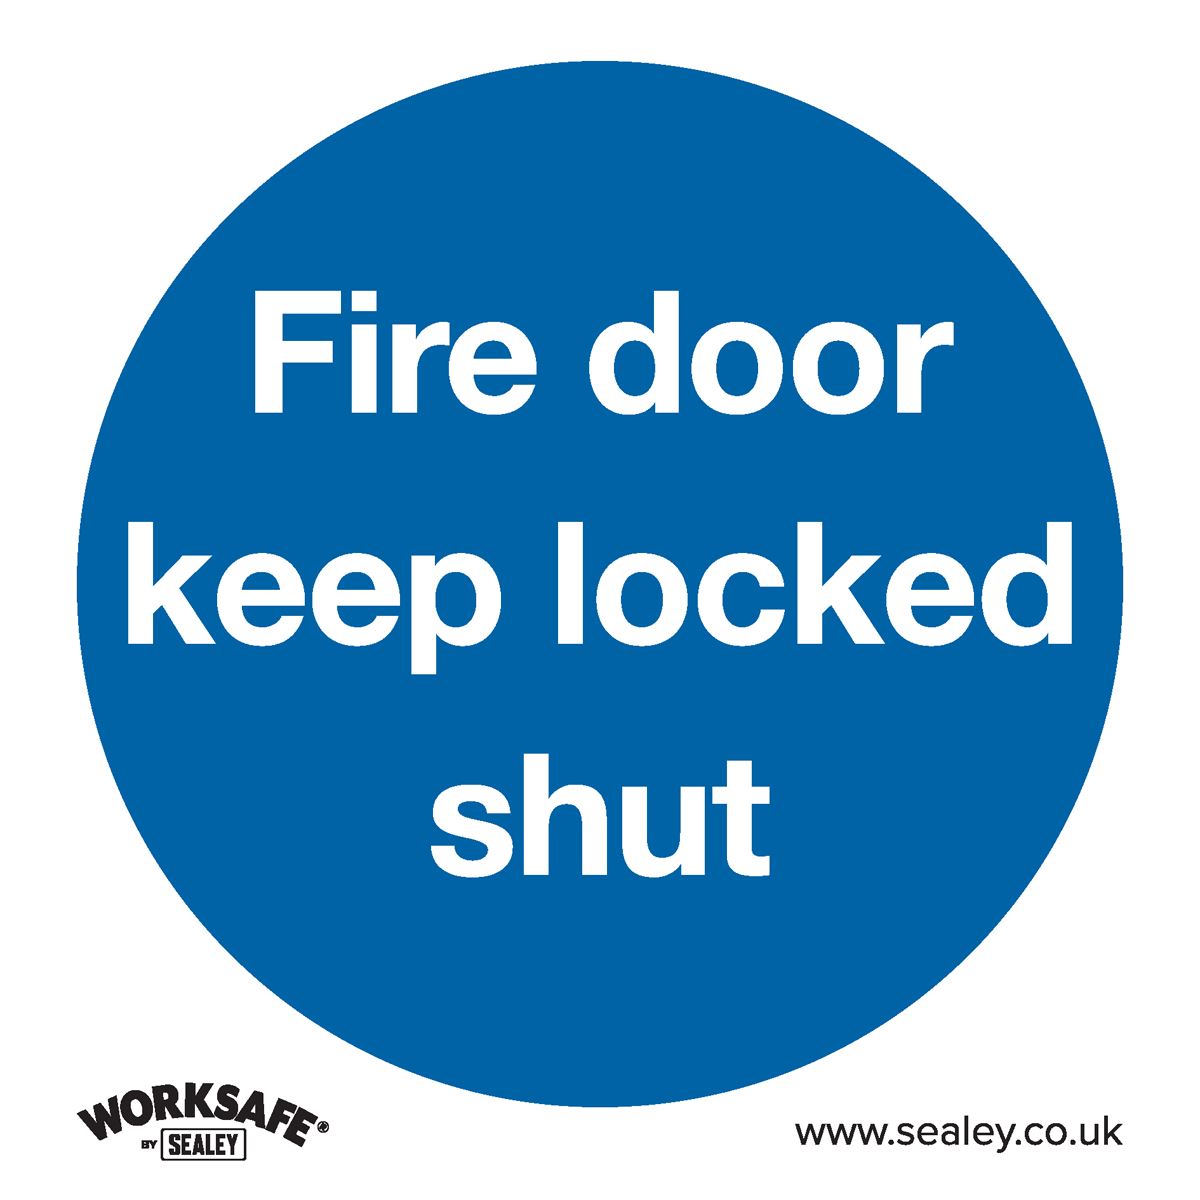 Worksafe by Sealey Mandatory Safety Sign - Fire Door Keep Locked Shut - Self-Adhesive Vinyl - Pack of 10